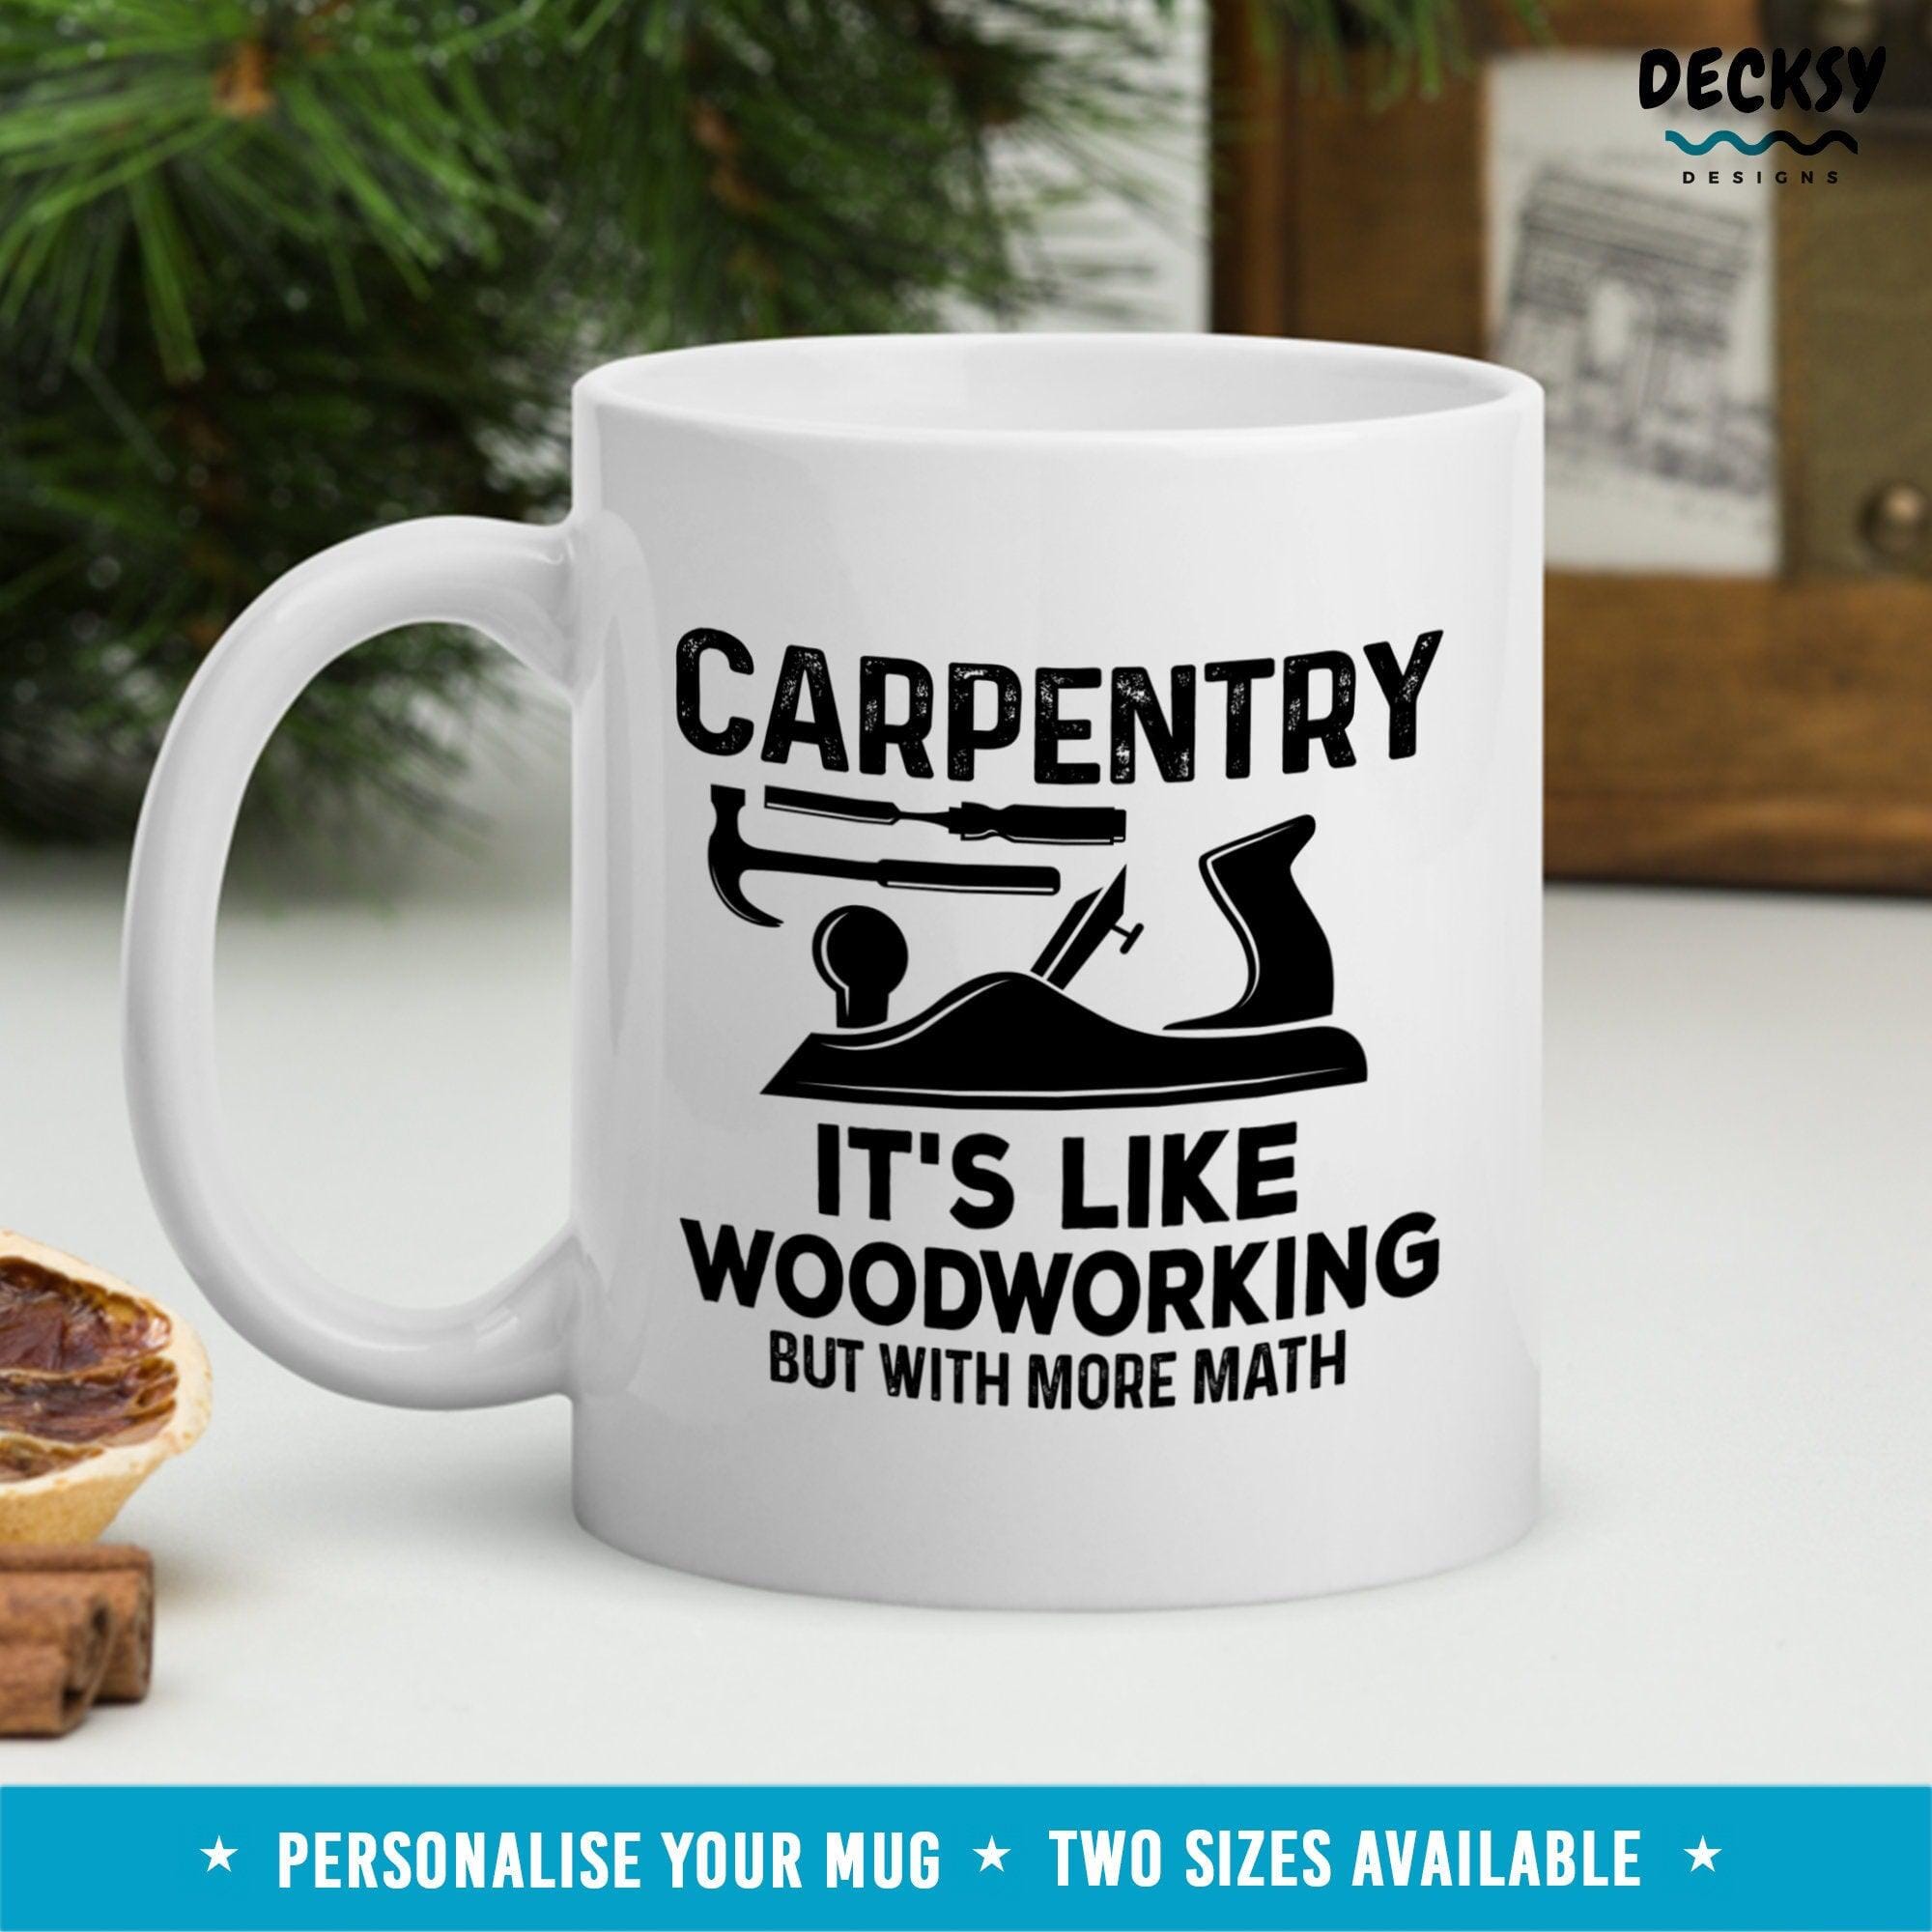 Custom Carpenter Mug, Funny Woodworker Gifts-Home & Living:Kitchen & Dining:Drink & Barware:Drinkware:Mugs-DecksyDesigns-White Mug 11 oz-NO PERSONALISATION-DecksyDesigns